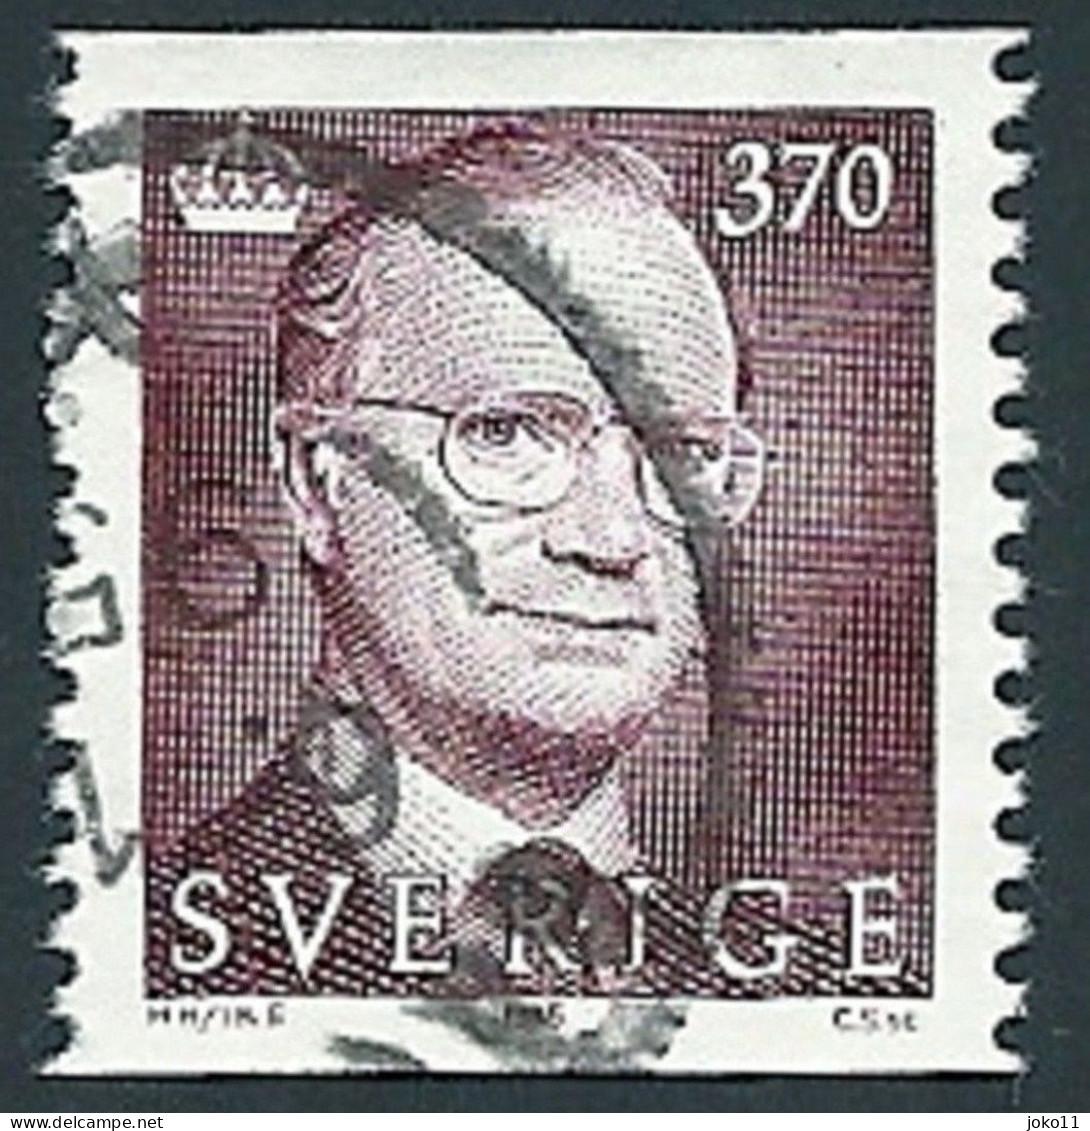 Schweden, 1995, Michel-Nr. 1865, Gestempelt - Used Stamps